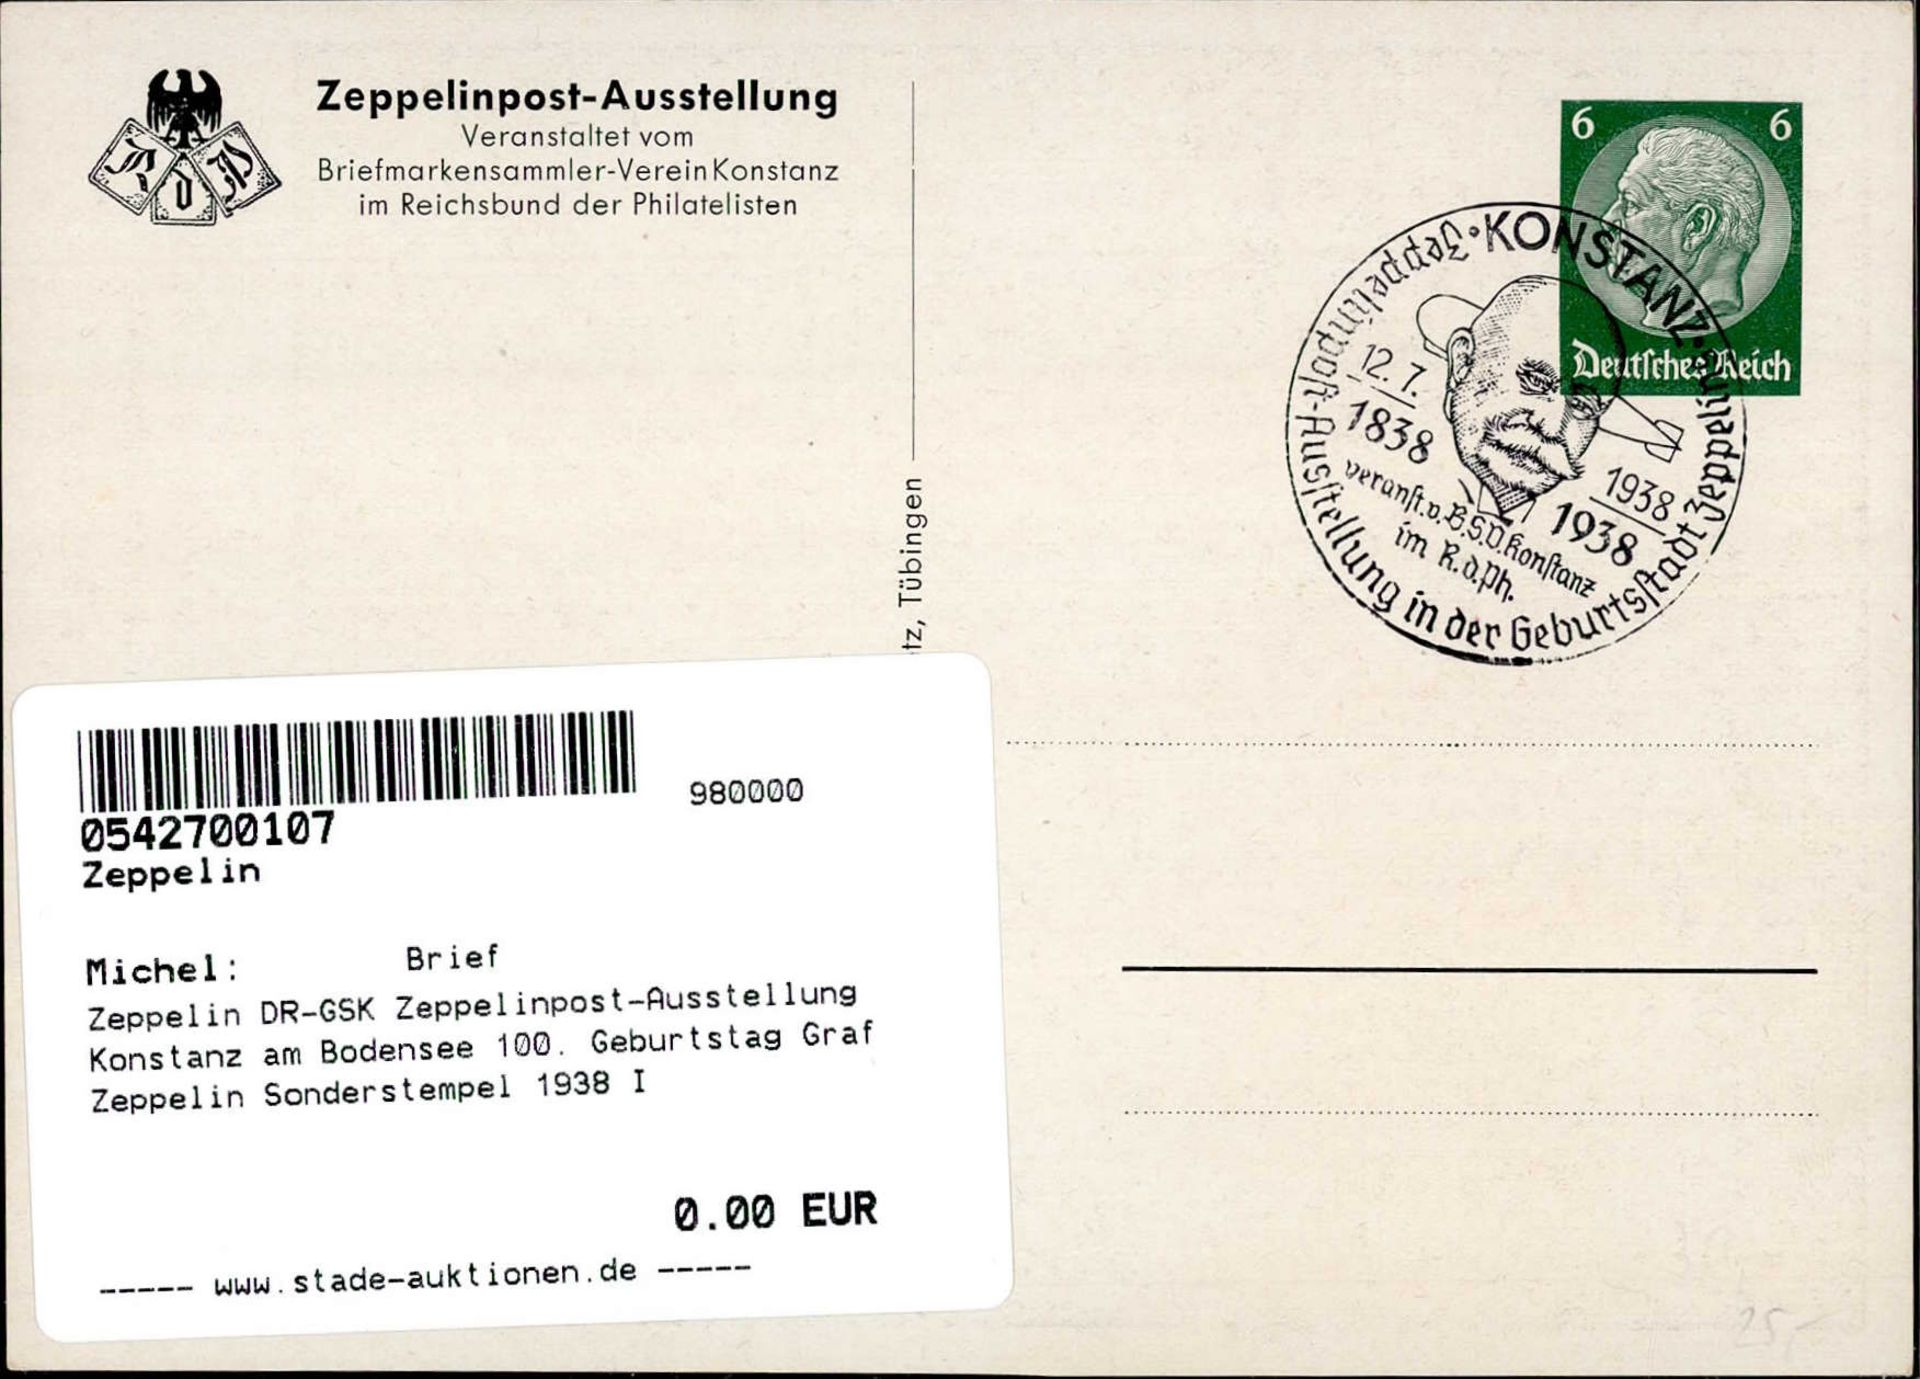 Zeppelin DR-GSK Zeppelinpost-Ausstellung Konstanz am Bodensee 100. Geburtstag Graf Zeppelin - Image 2 of 2